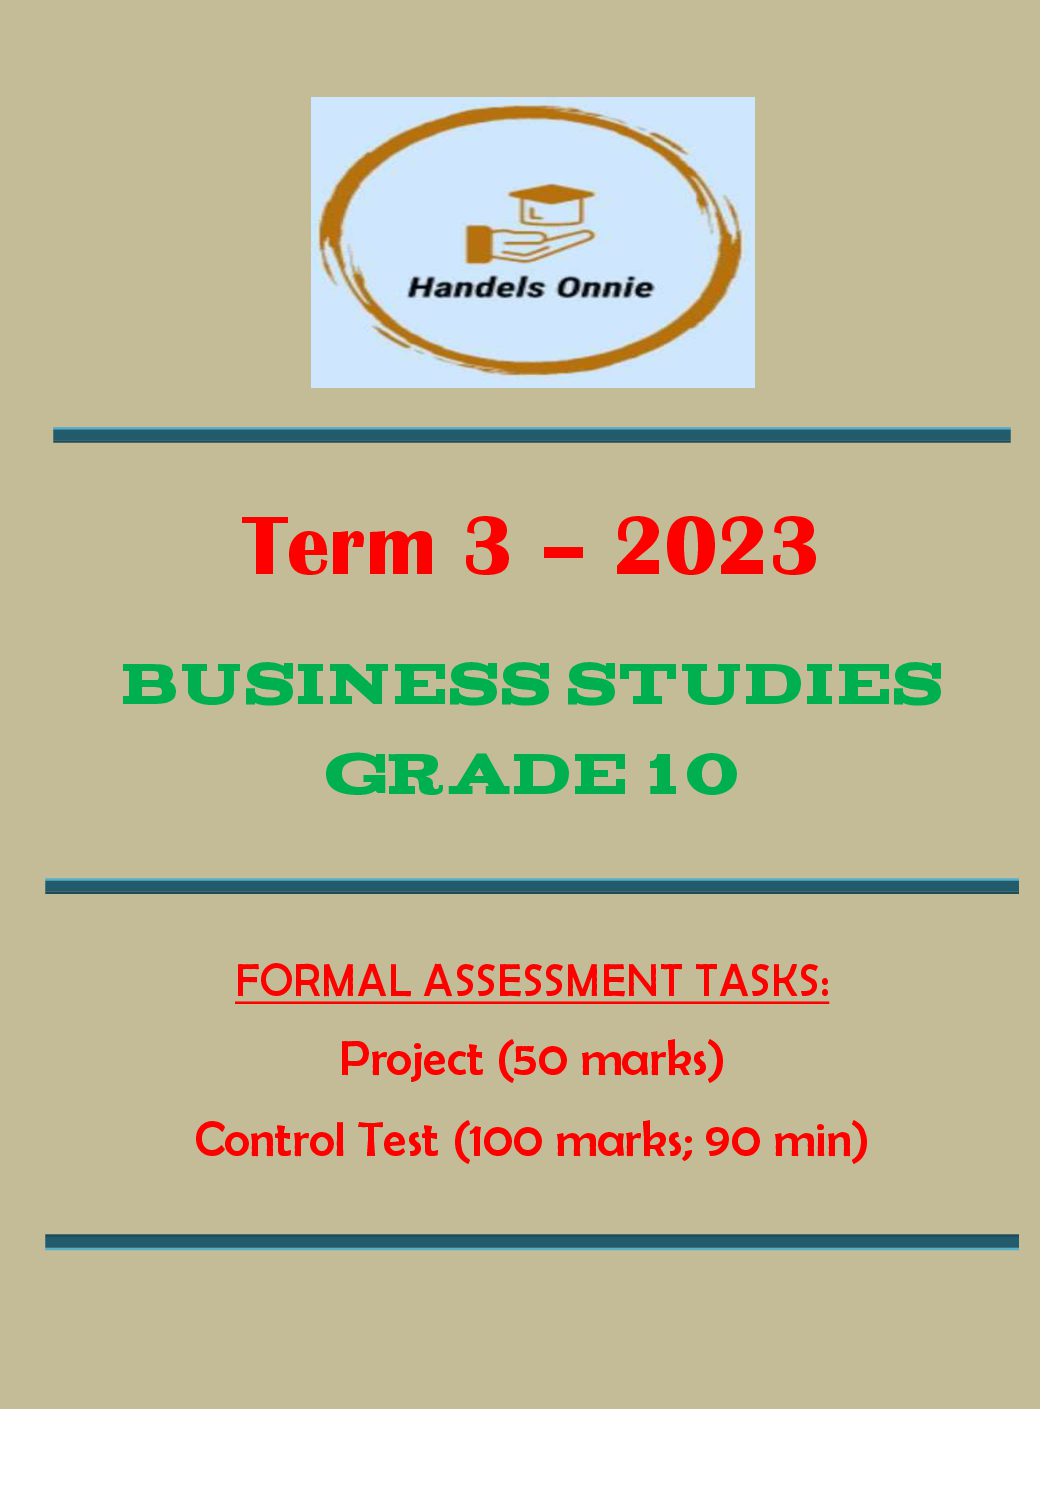 grade 8 assignment term 3 2023